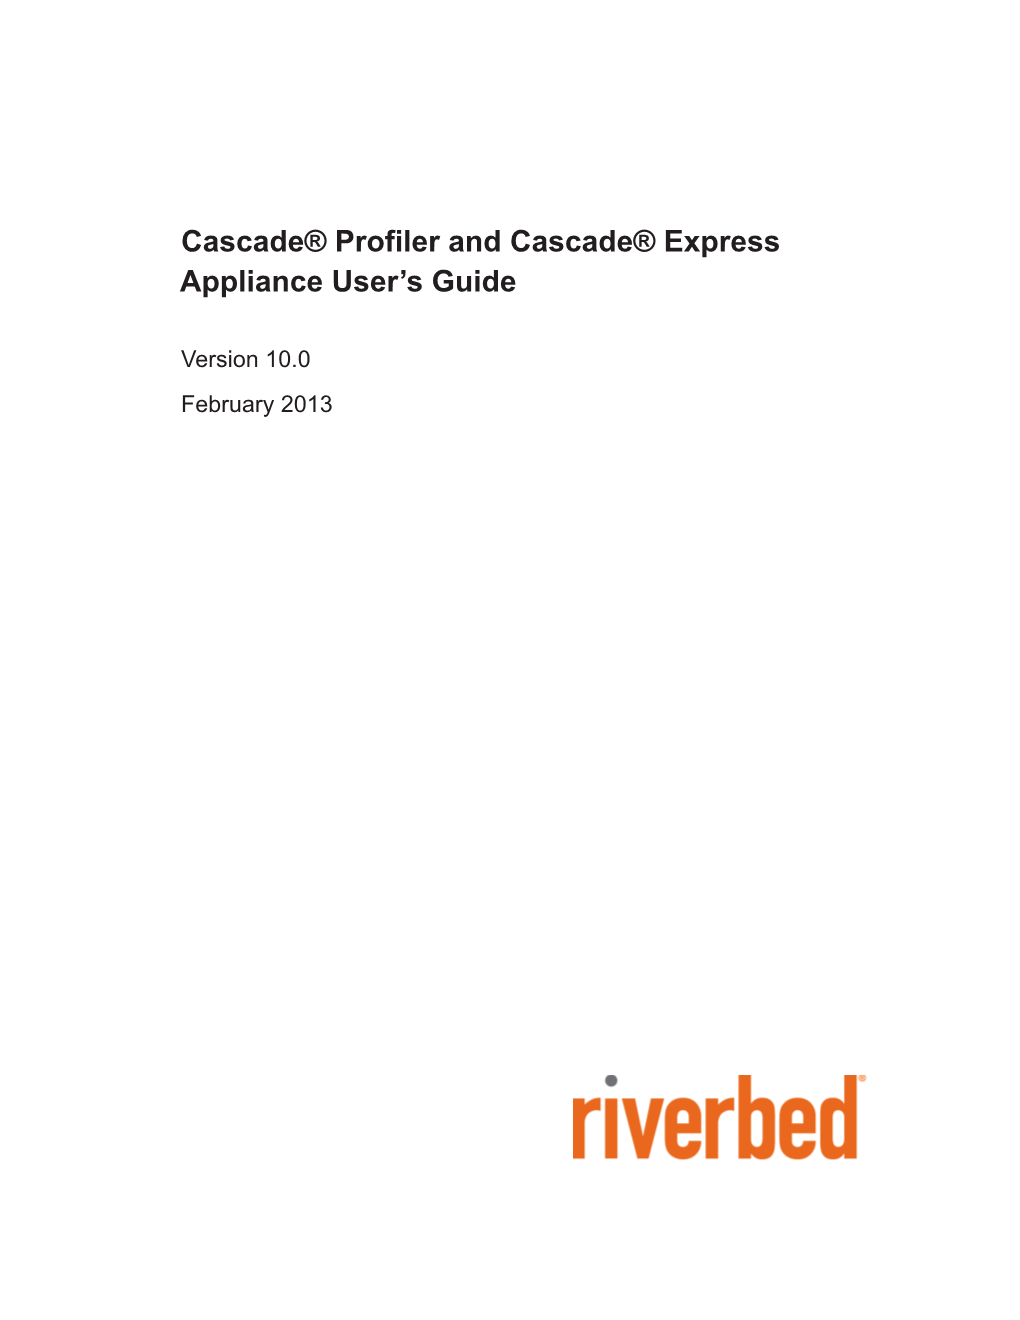 Cascade® Profiler and Cascade® Express Appliance User's Guide